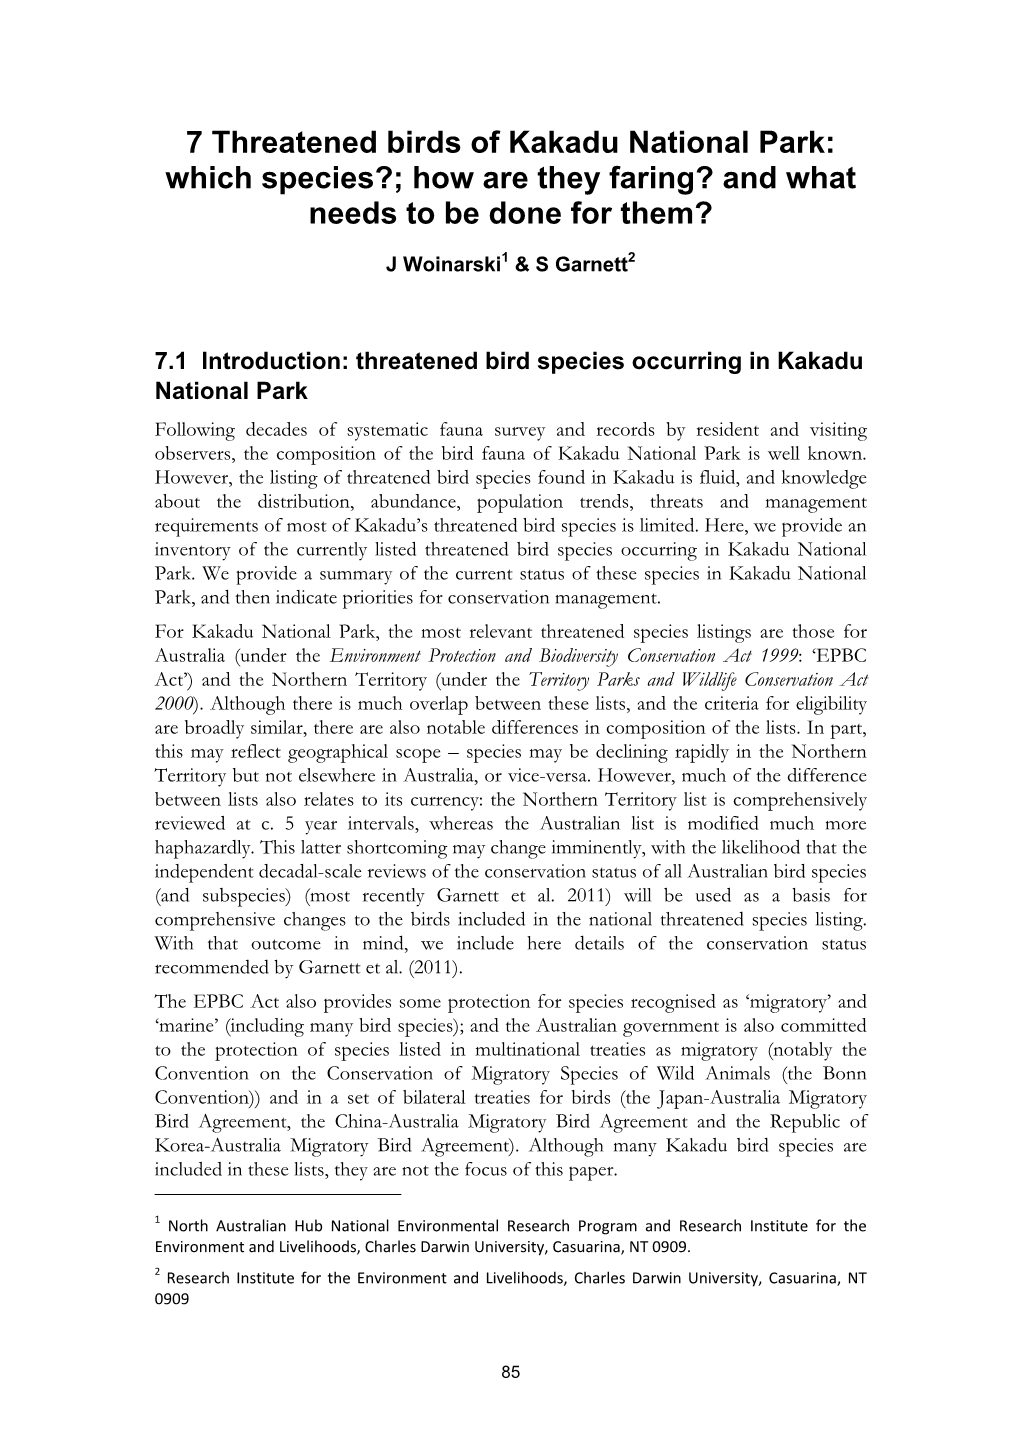 Kakadu National Park Landscape Symposia Series. Symposium 7